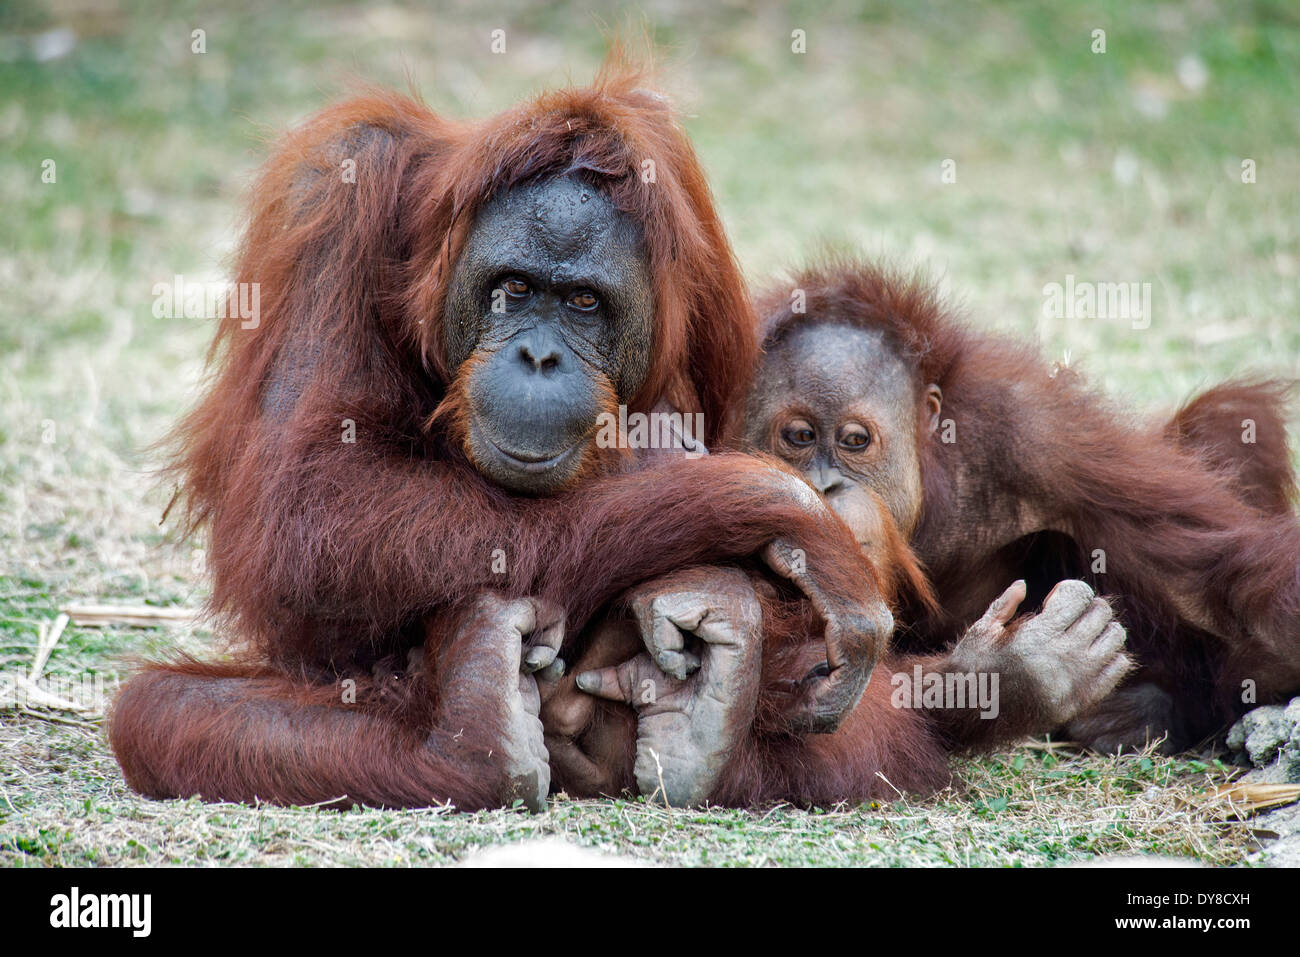 Sumatran, orang-utan, pongo pygmaeus, ape, animal Stock Photo